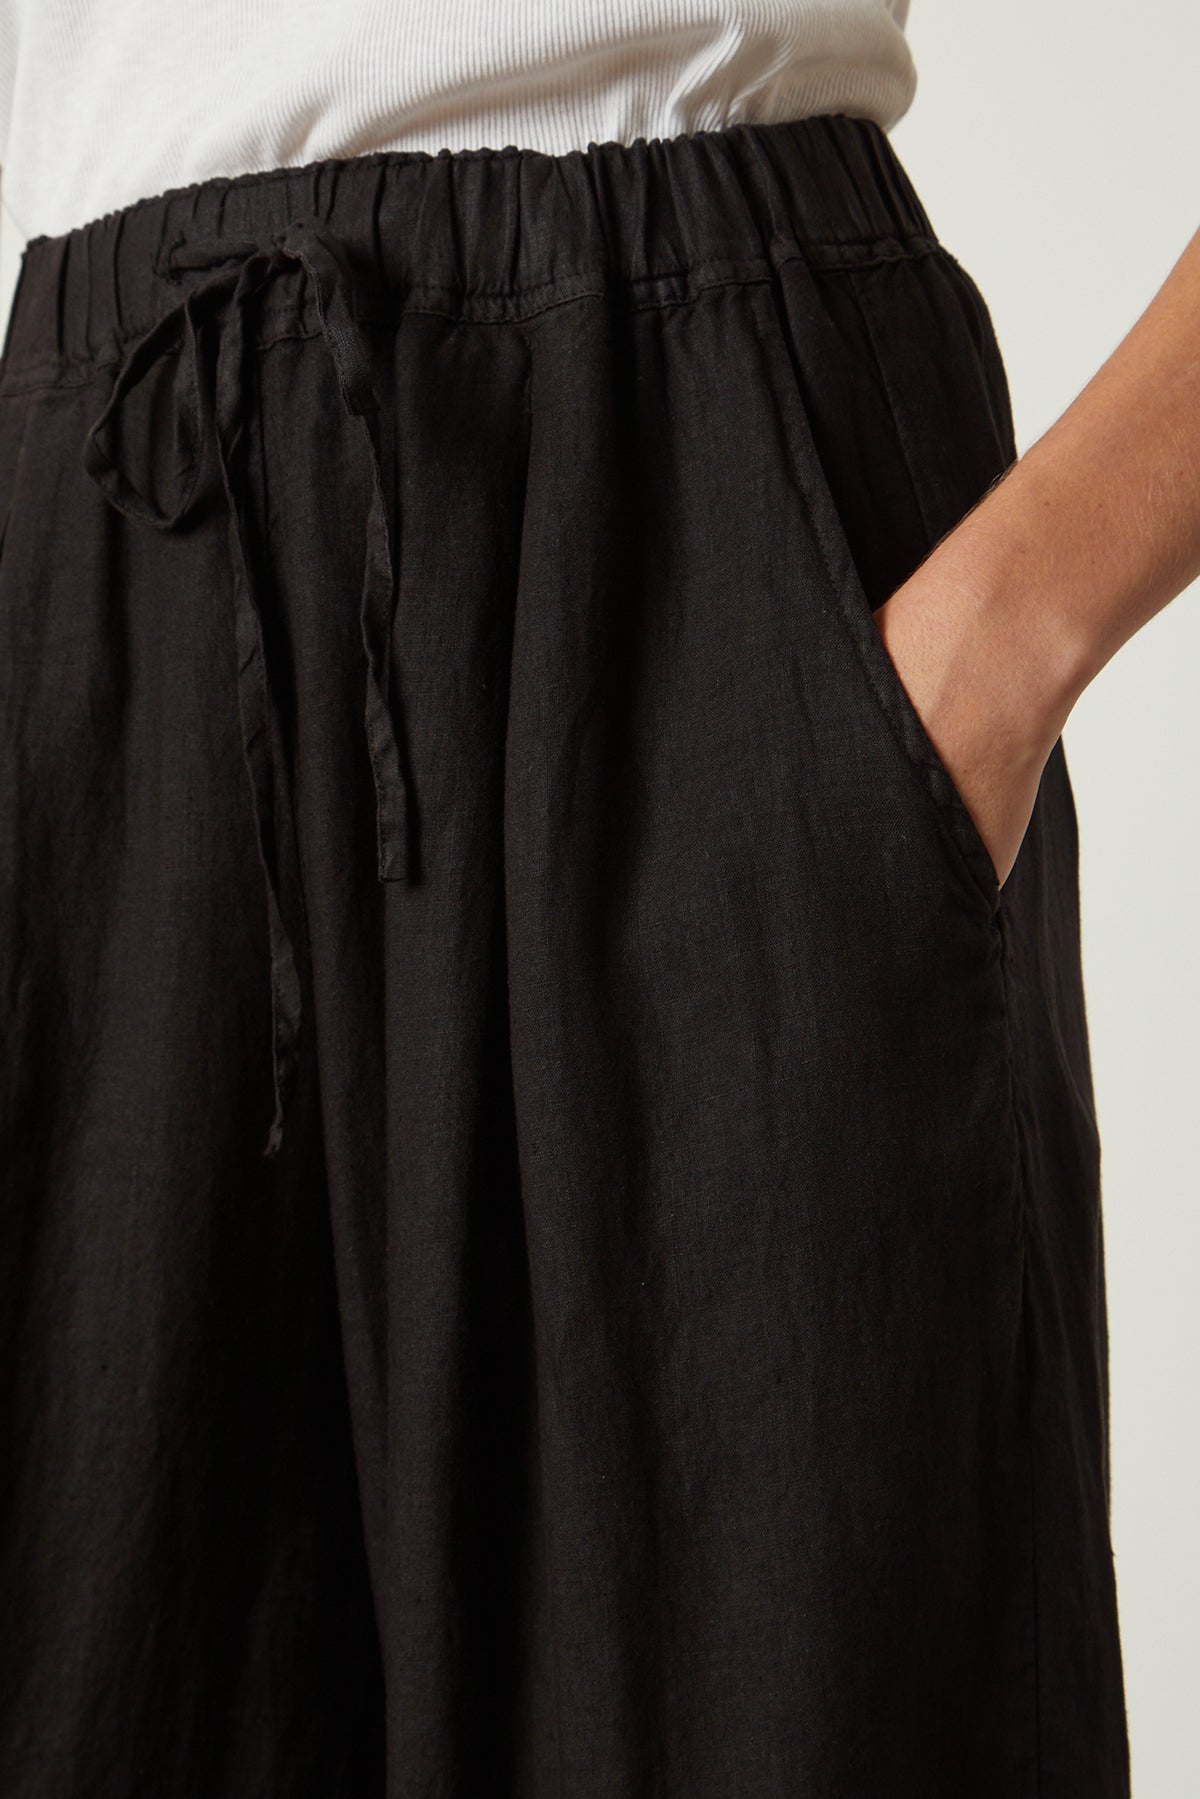 Hannah Linen Pant in black front & pocket detail-26142779736257